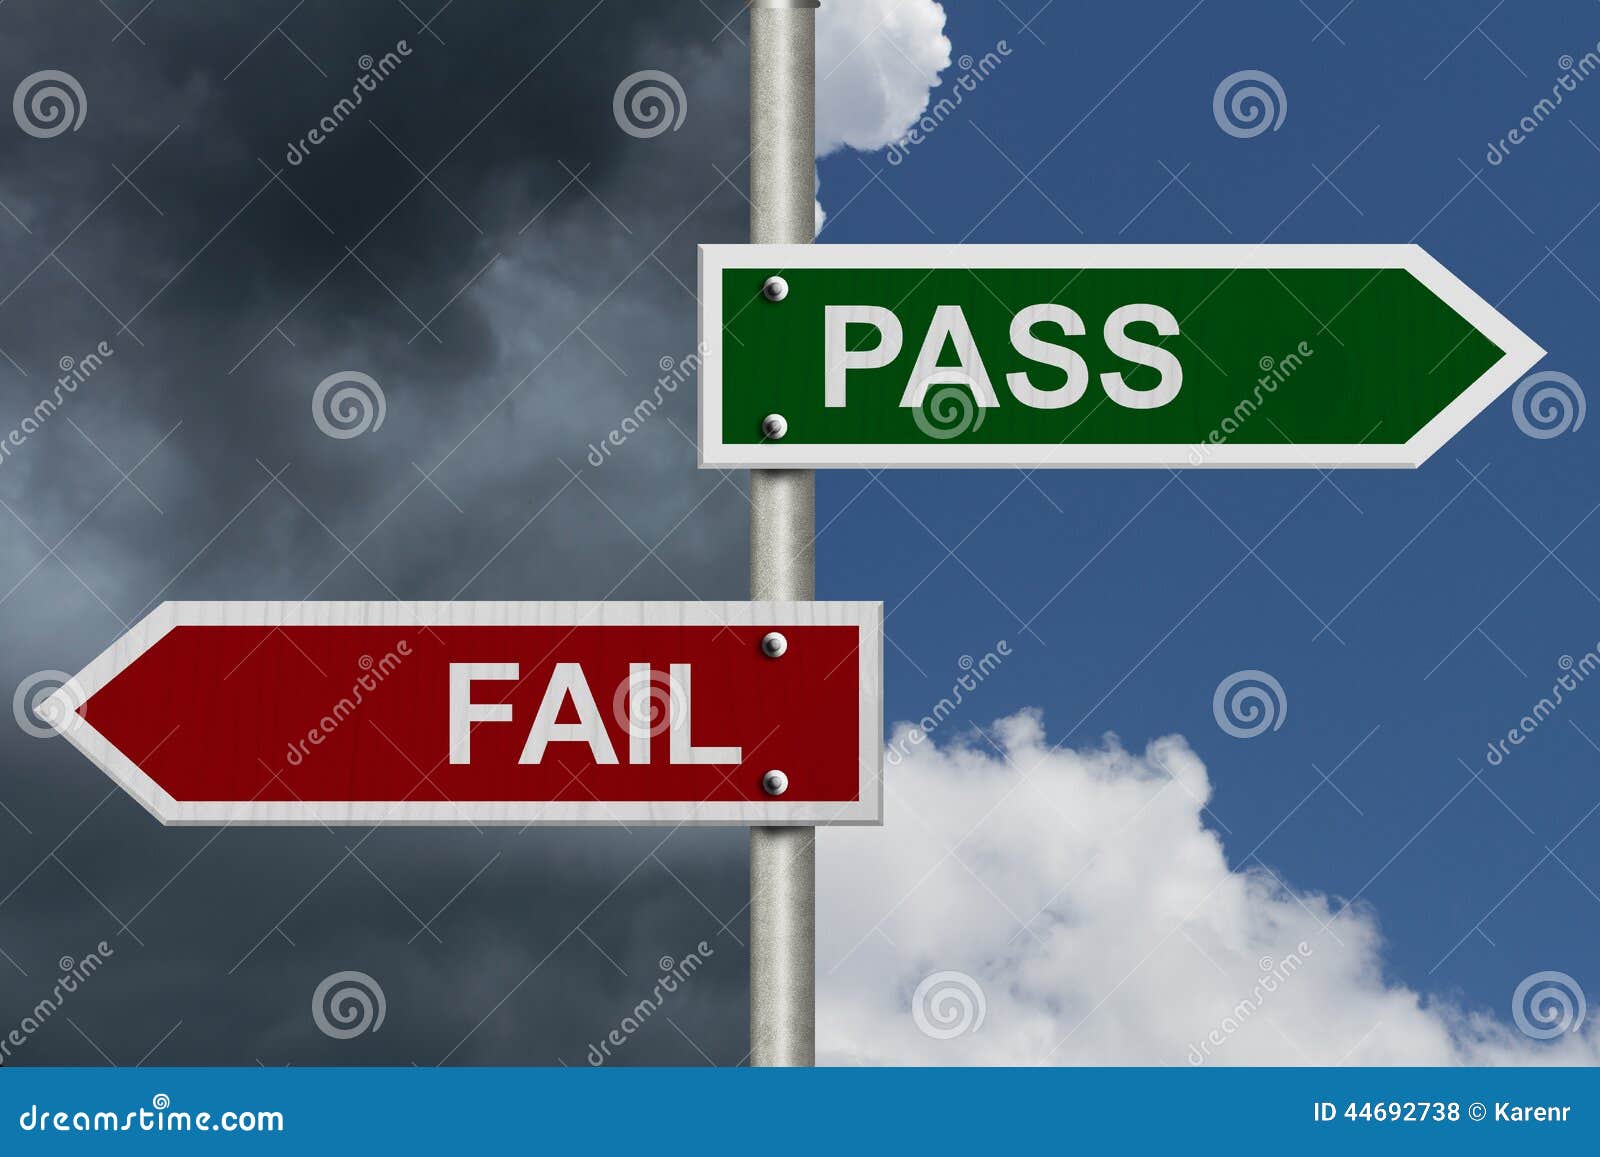 pass versus fail